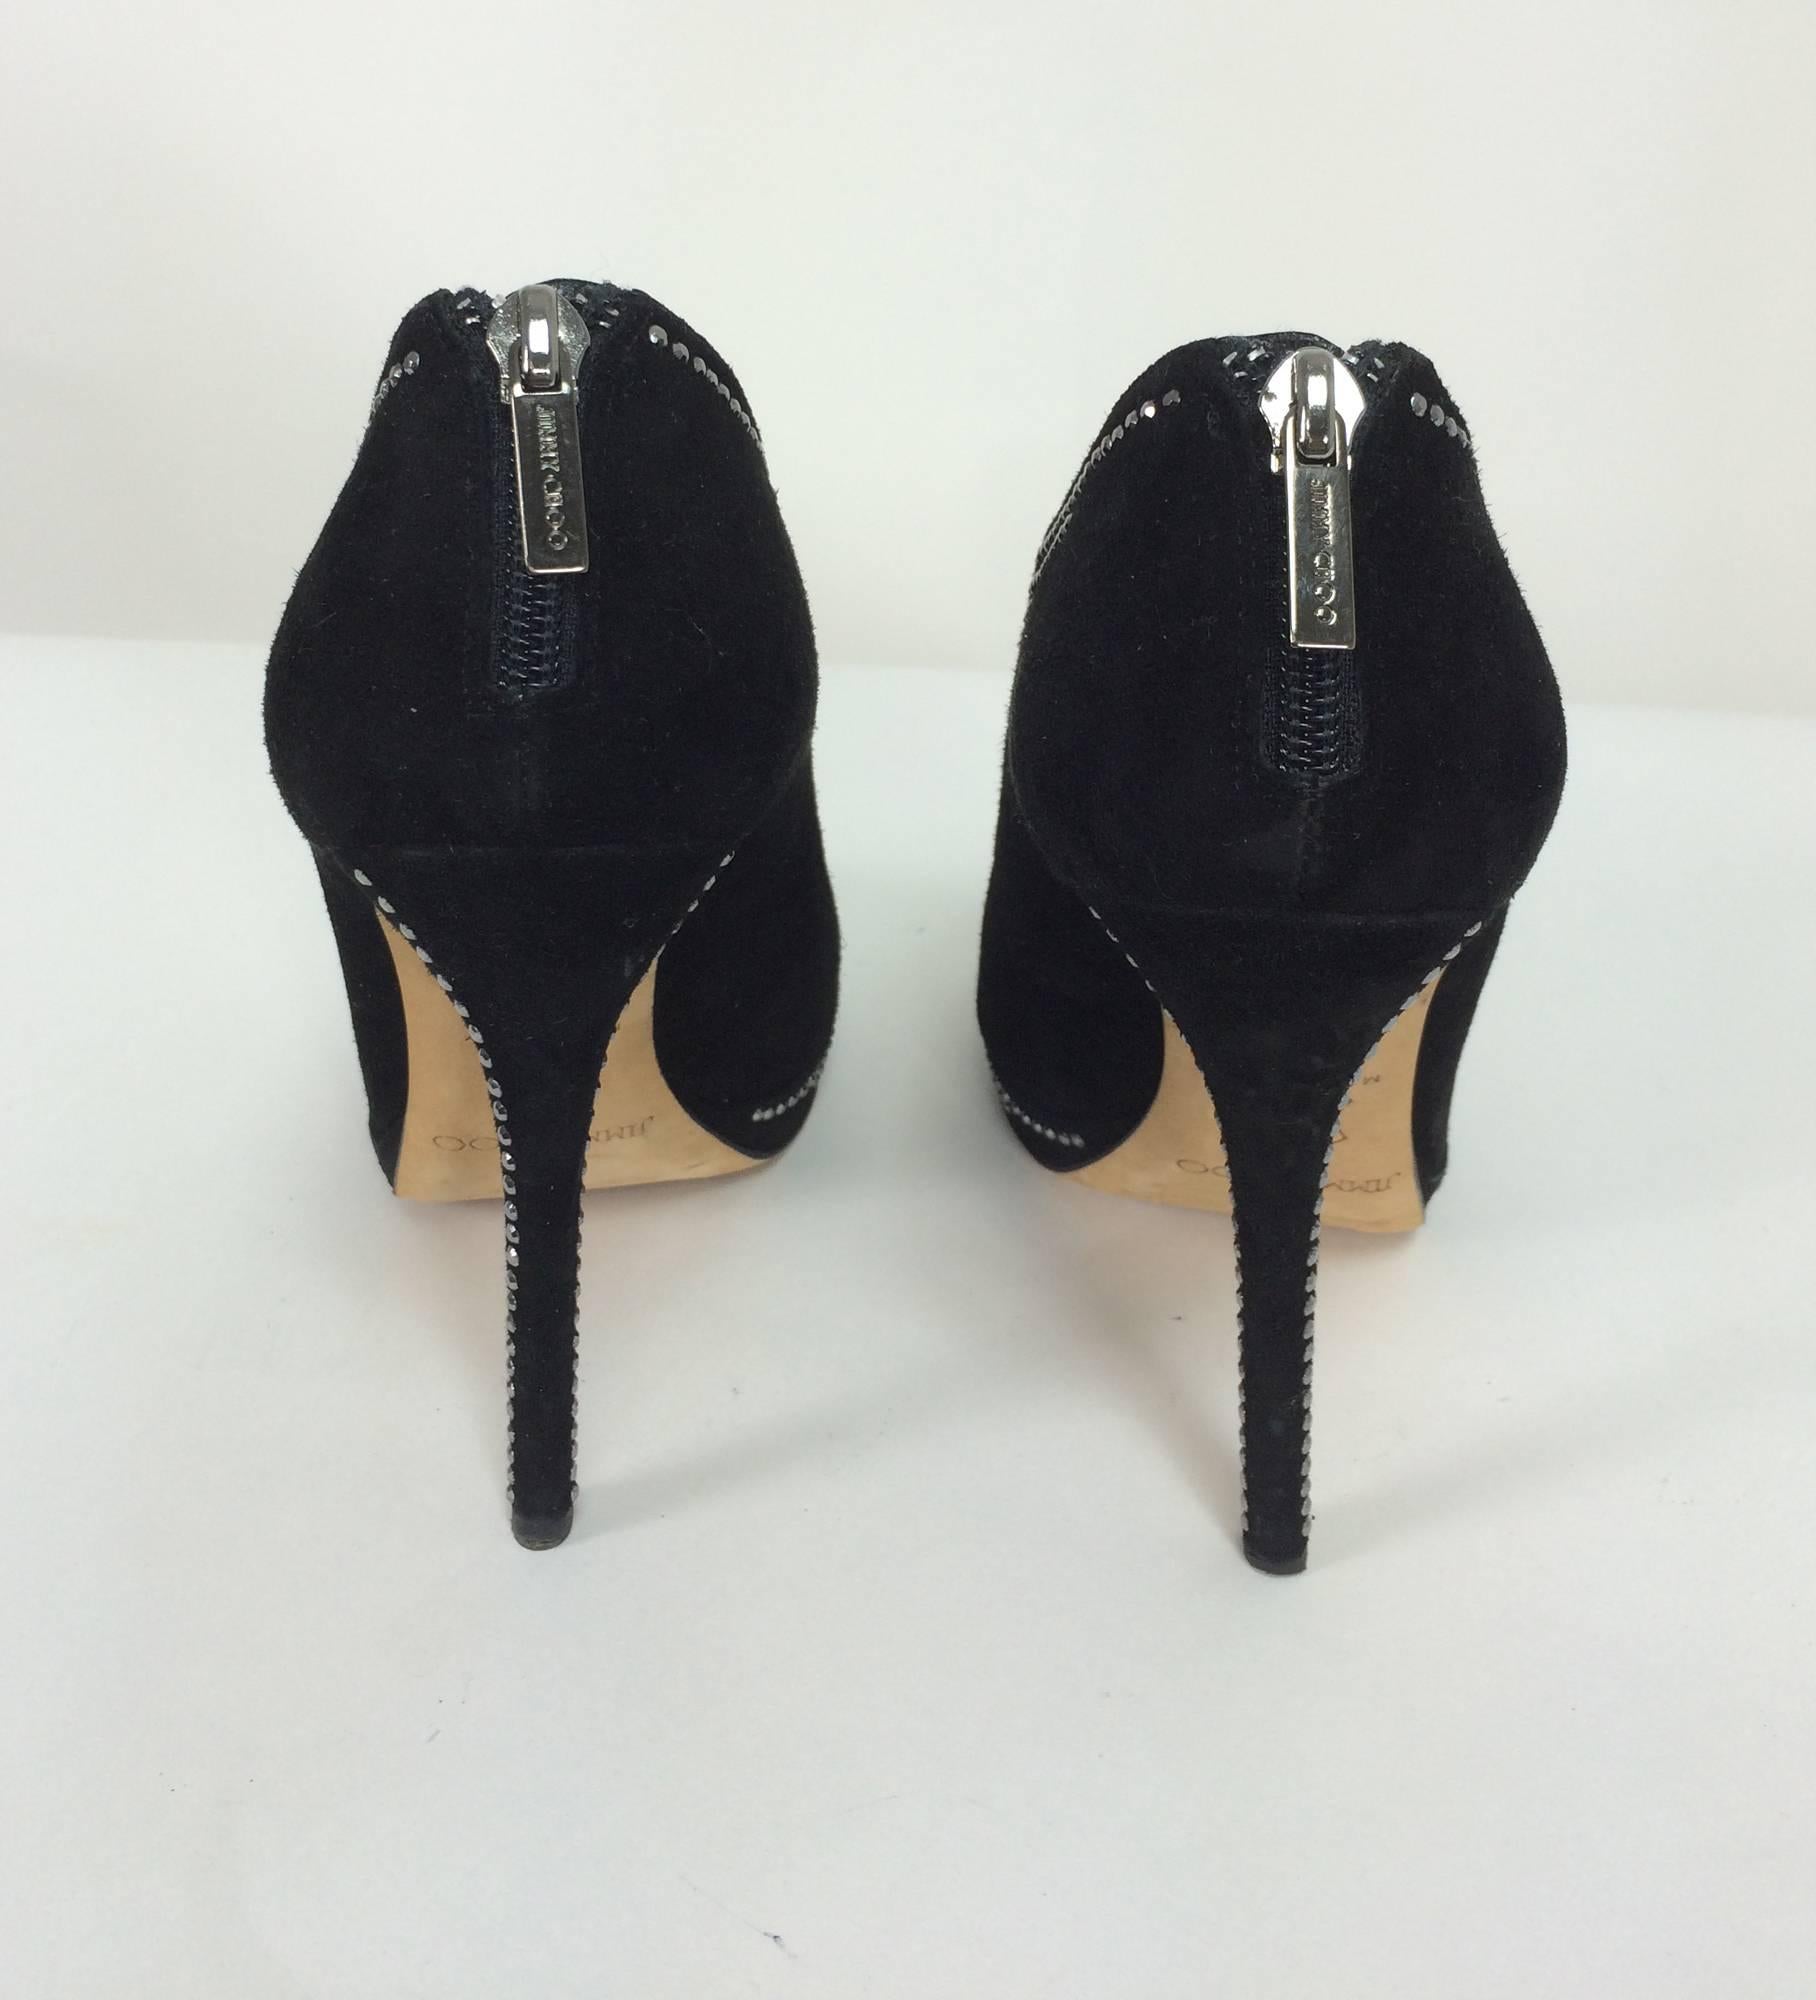 heels with zipper in back